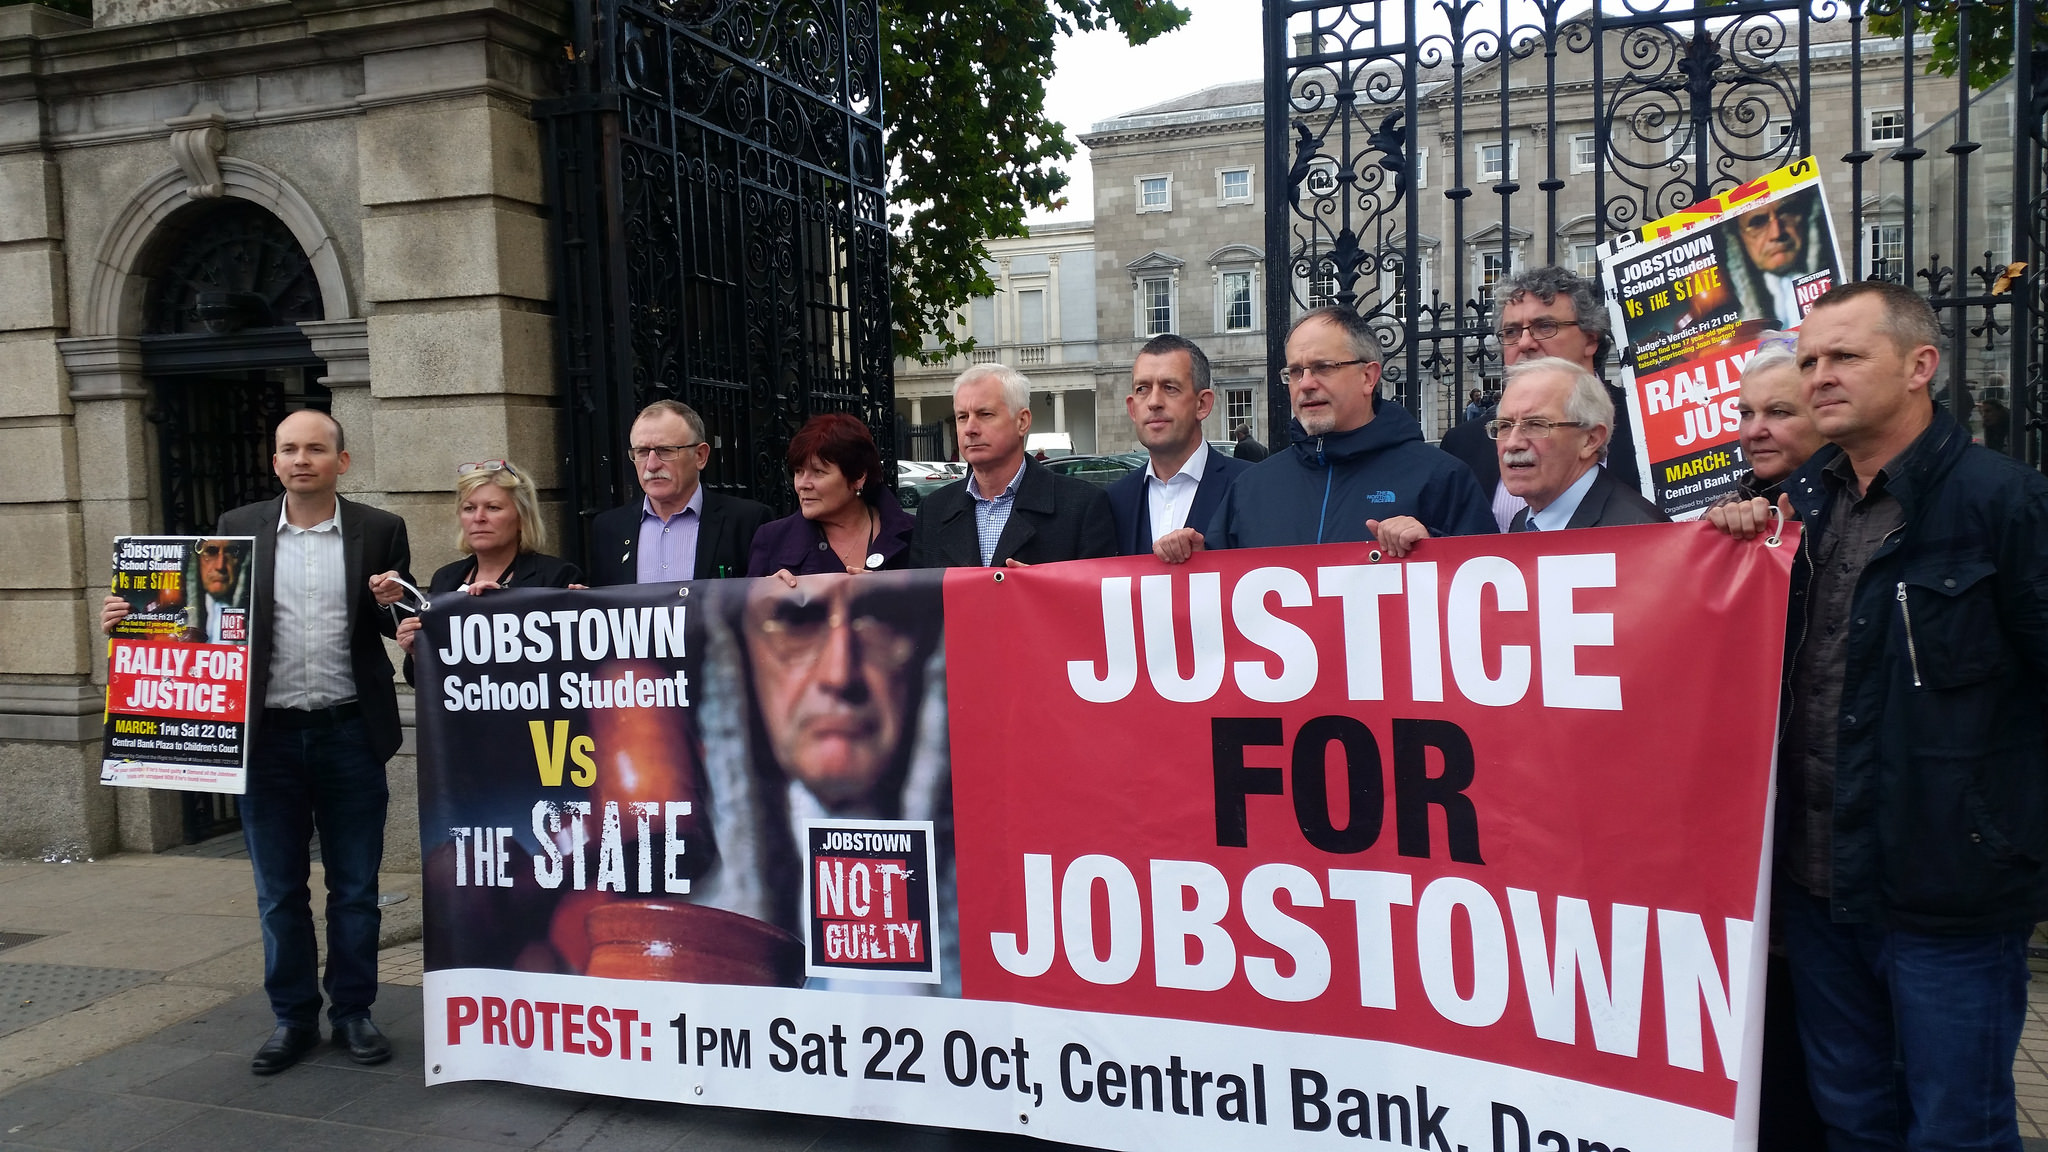 TDs and Senators support #JobstownNotGuilty